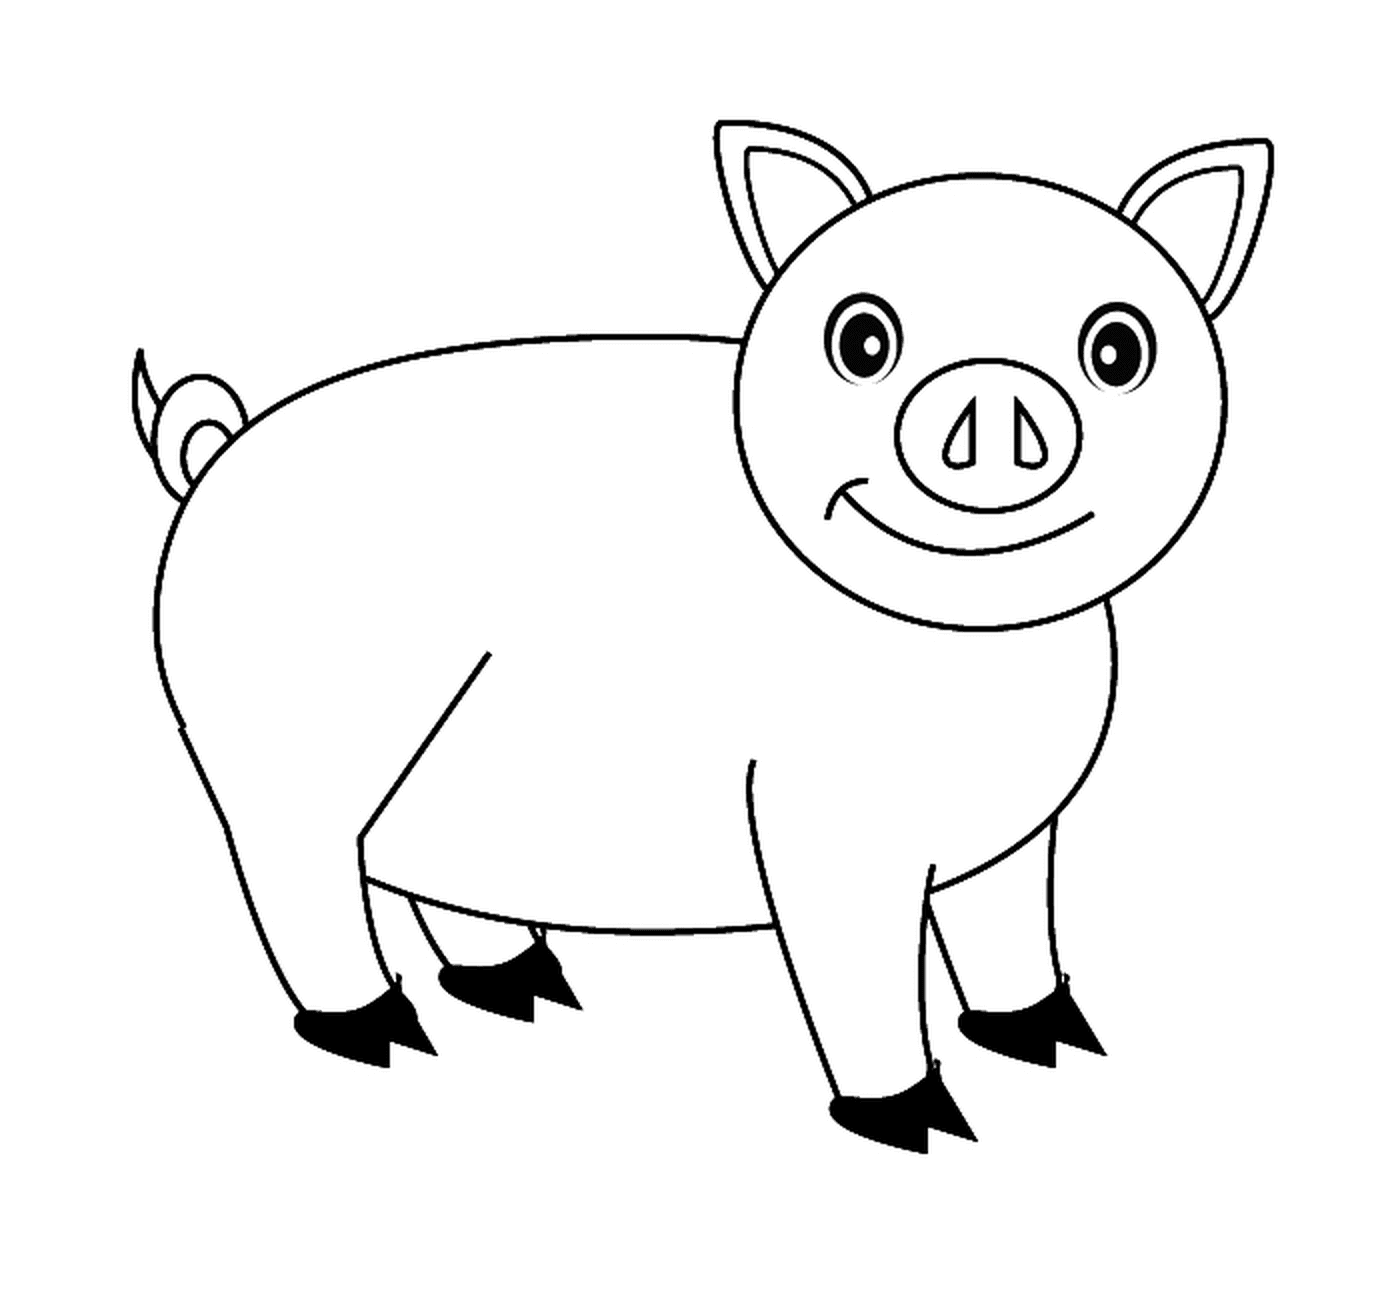  Un cerdo lindo 